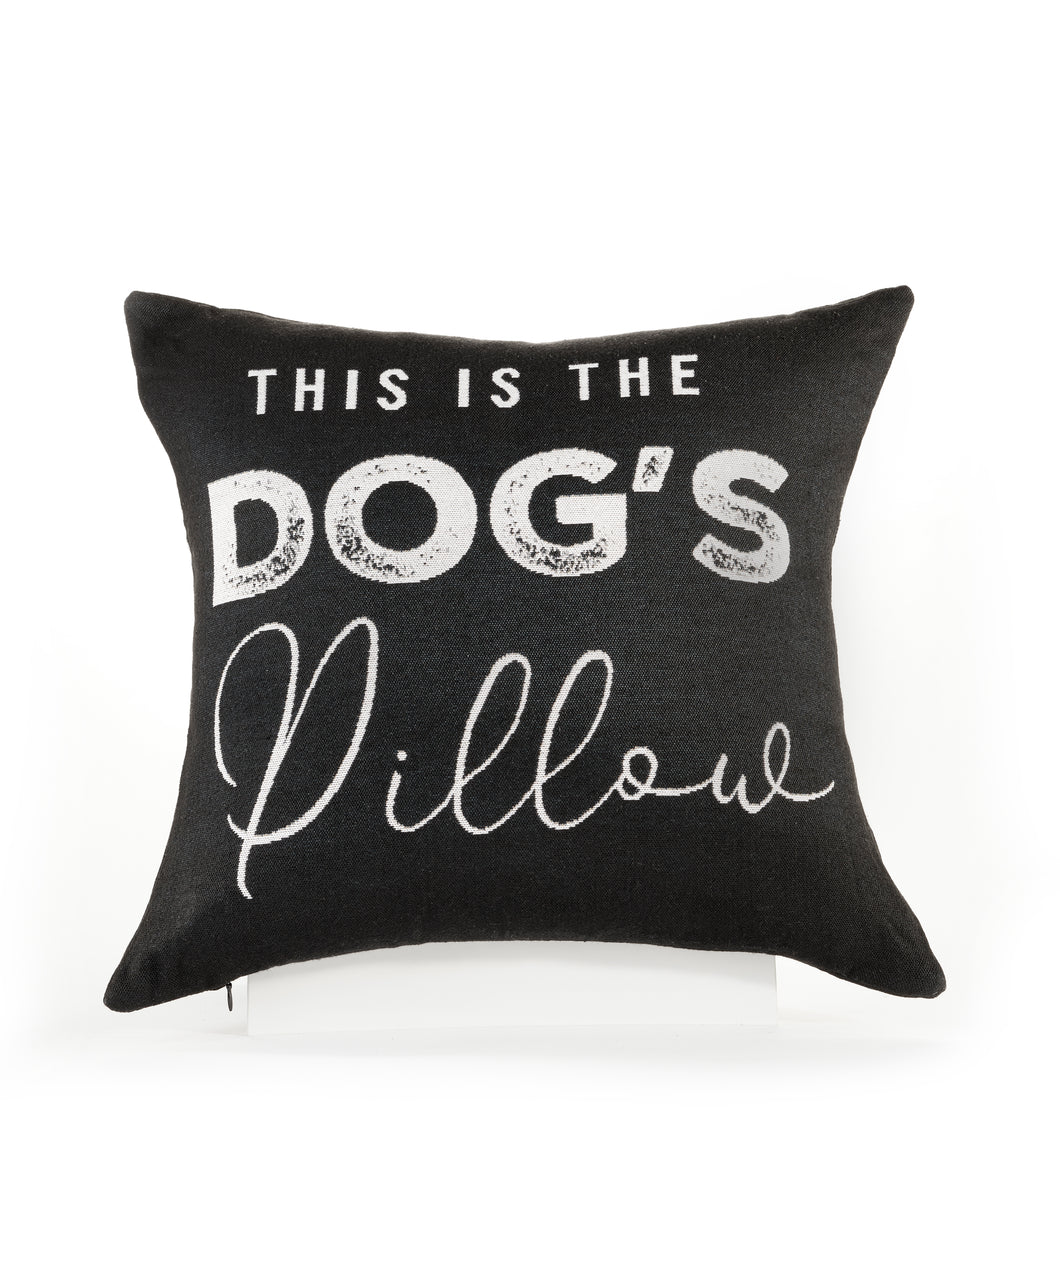 Dog's Pillow Black